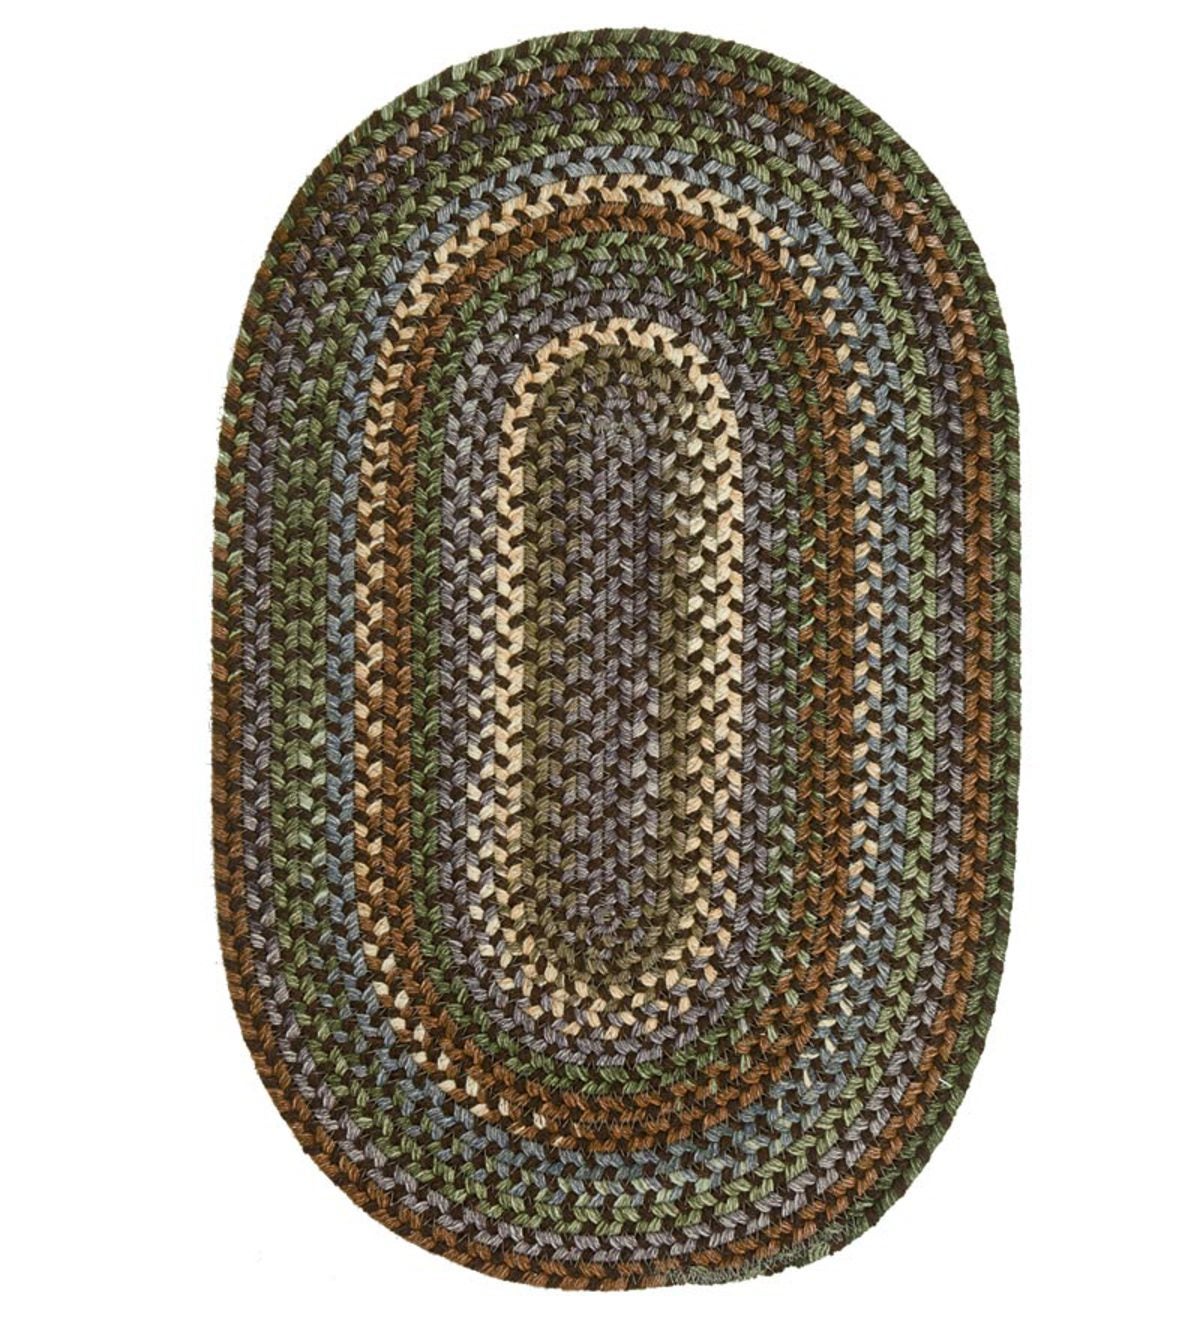 Bear Creek Oval Braided Wool Blend Rug, 5' x 8' - Chocolate Multi